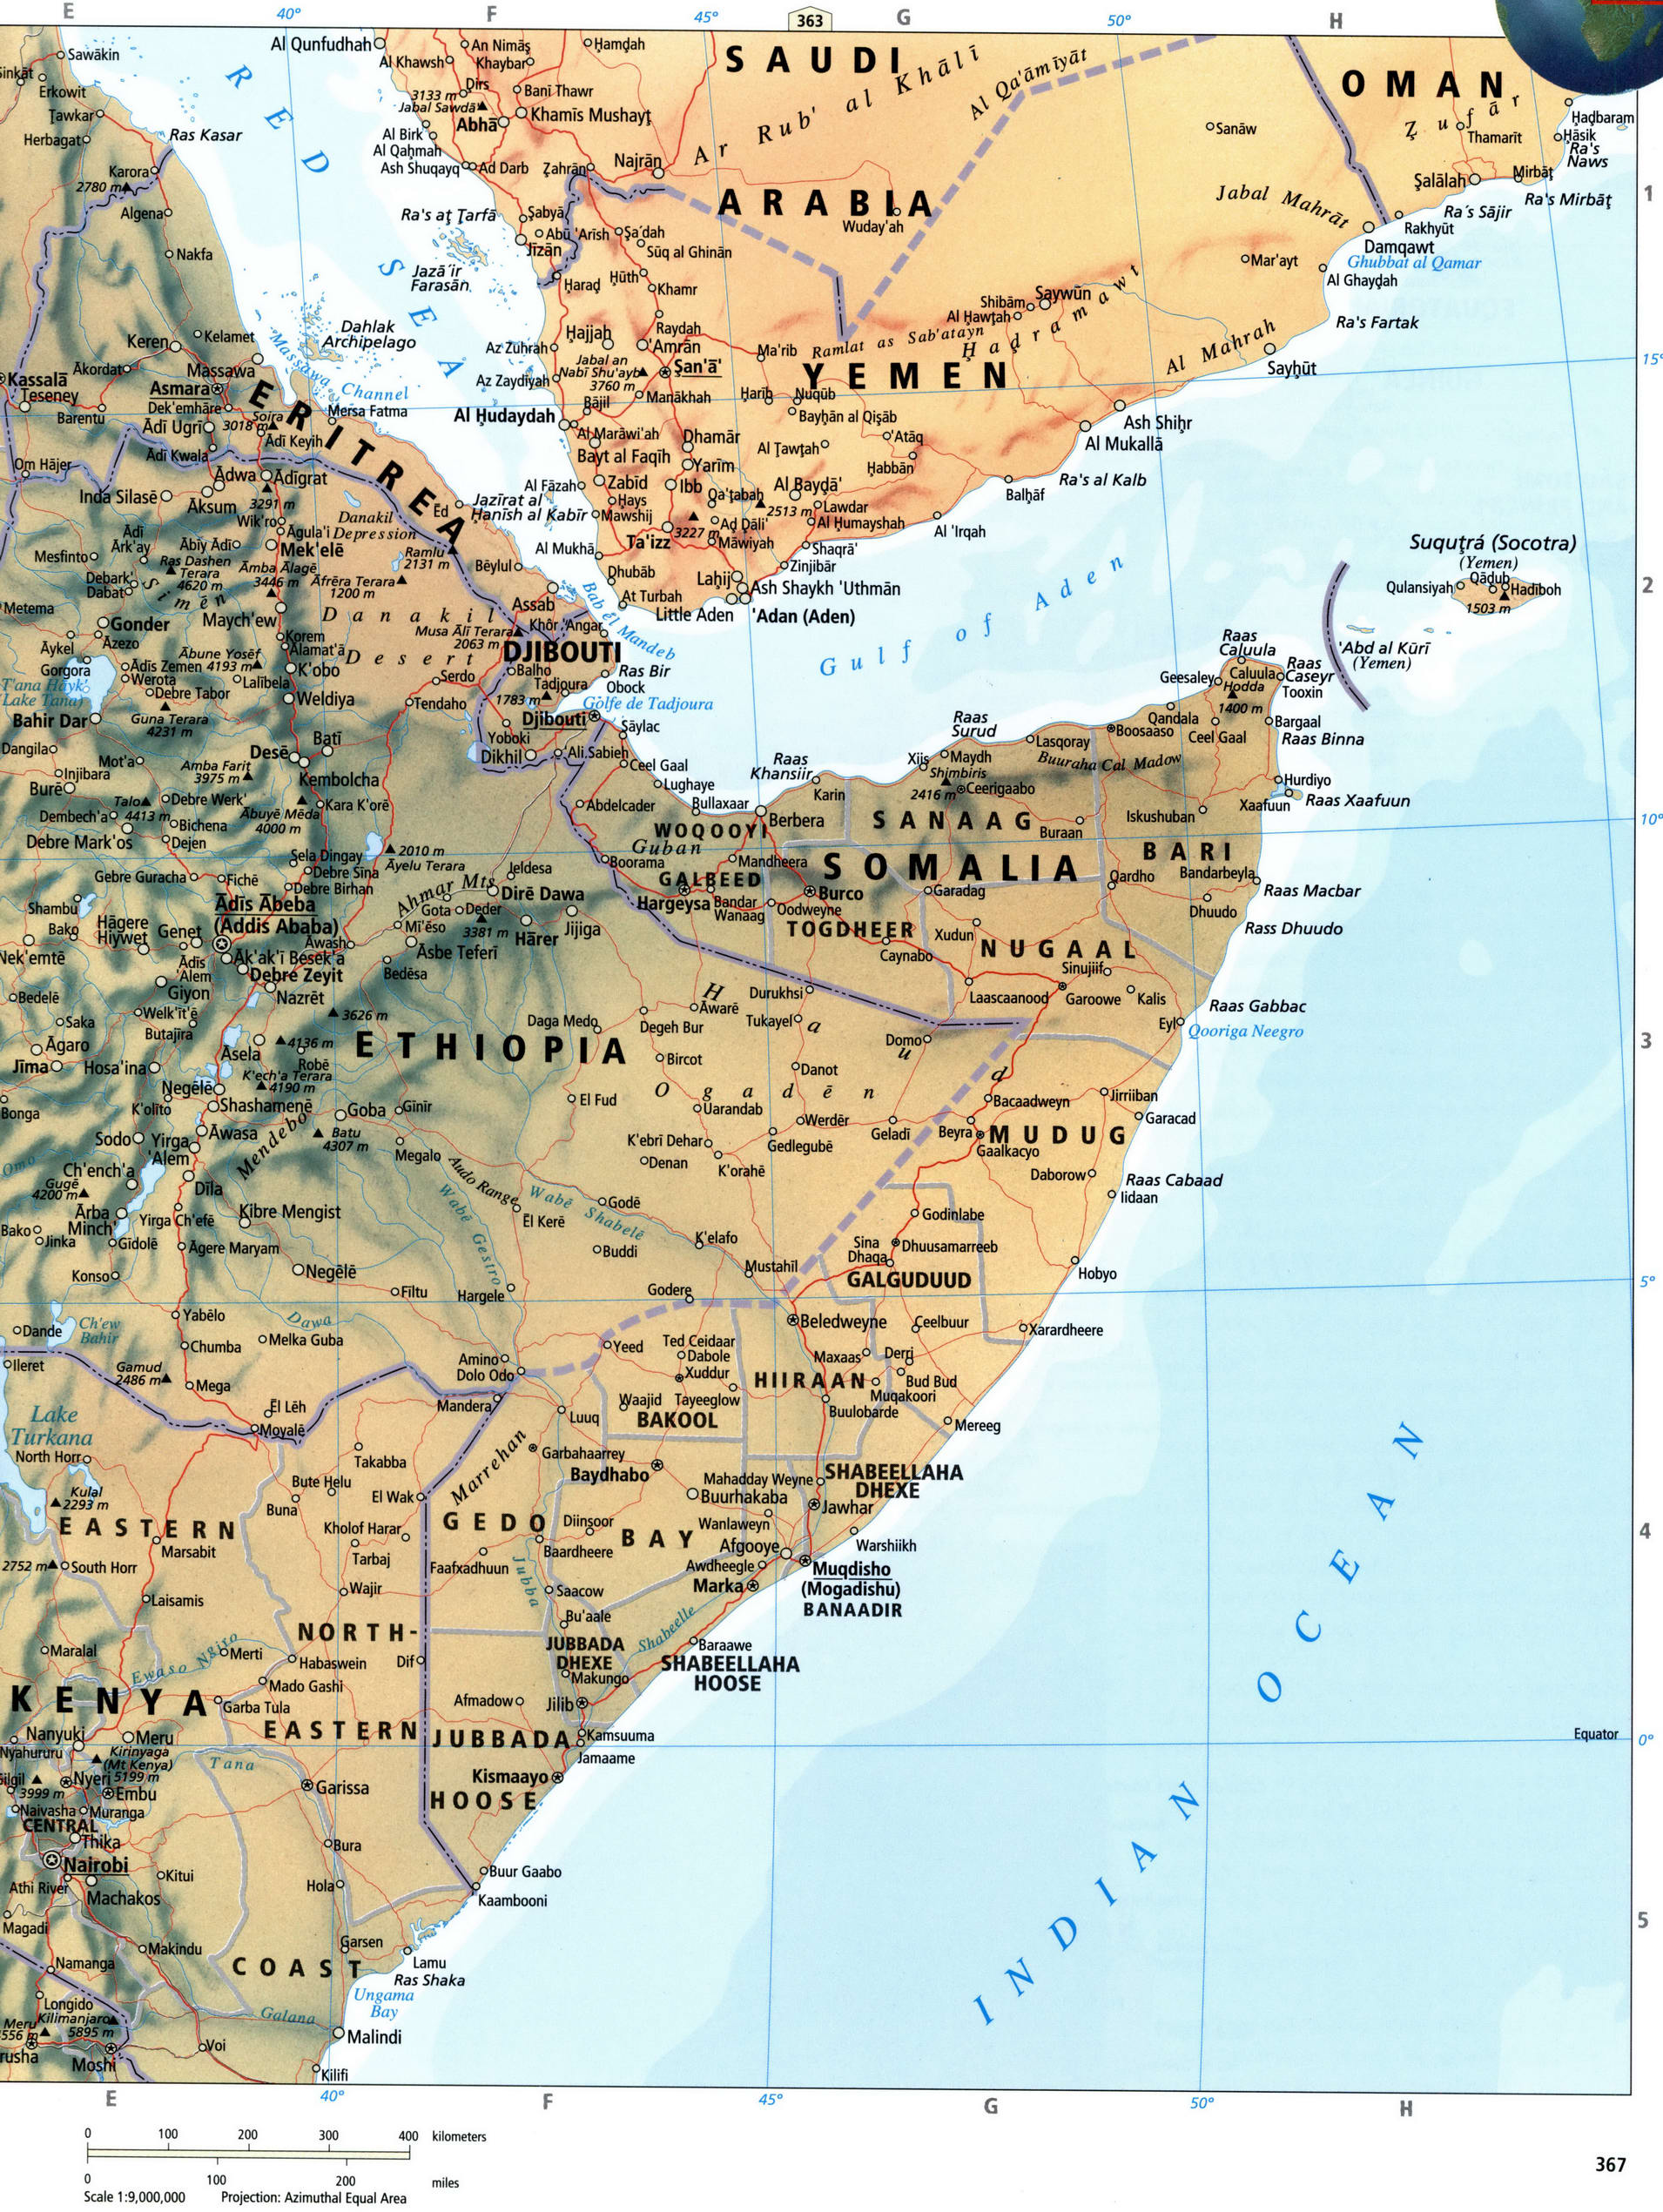 Ethiopia and Somalia map